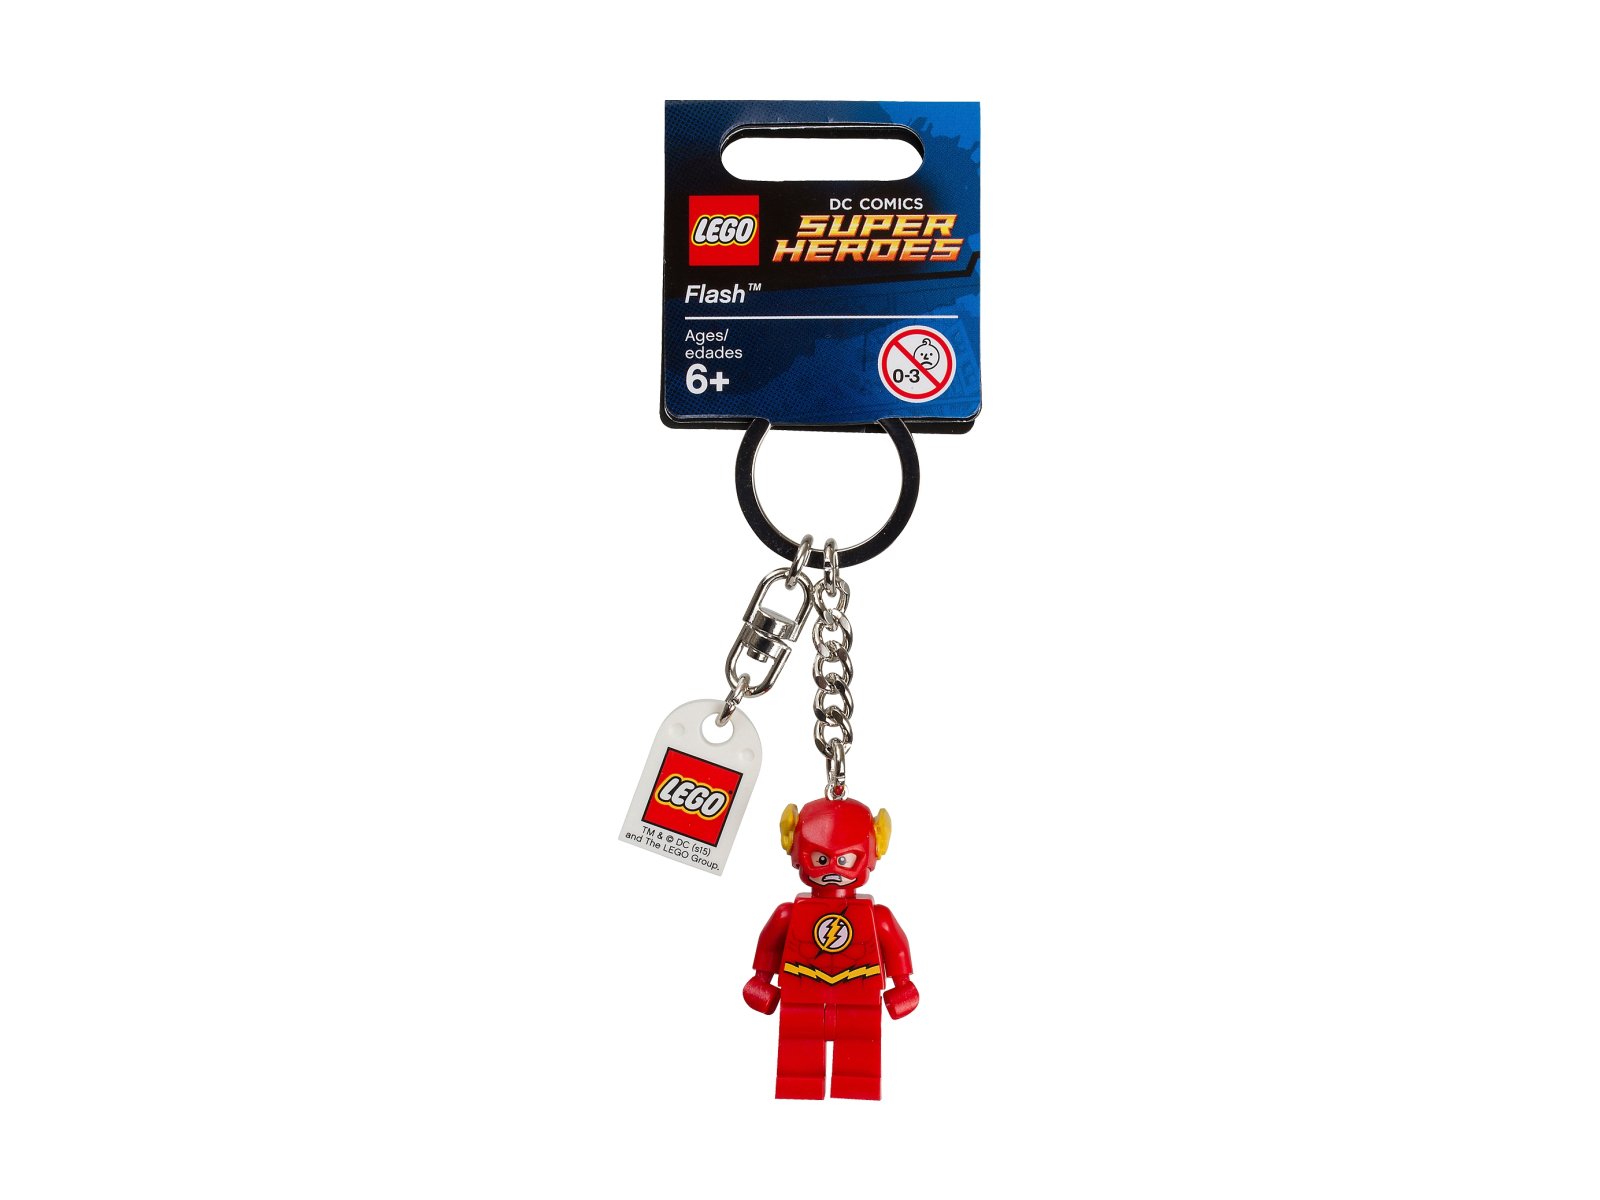 LEGO 853454 DC Comics Super Heroes Breloczek z Flashem